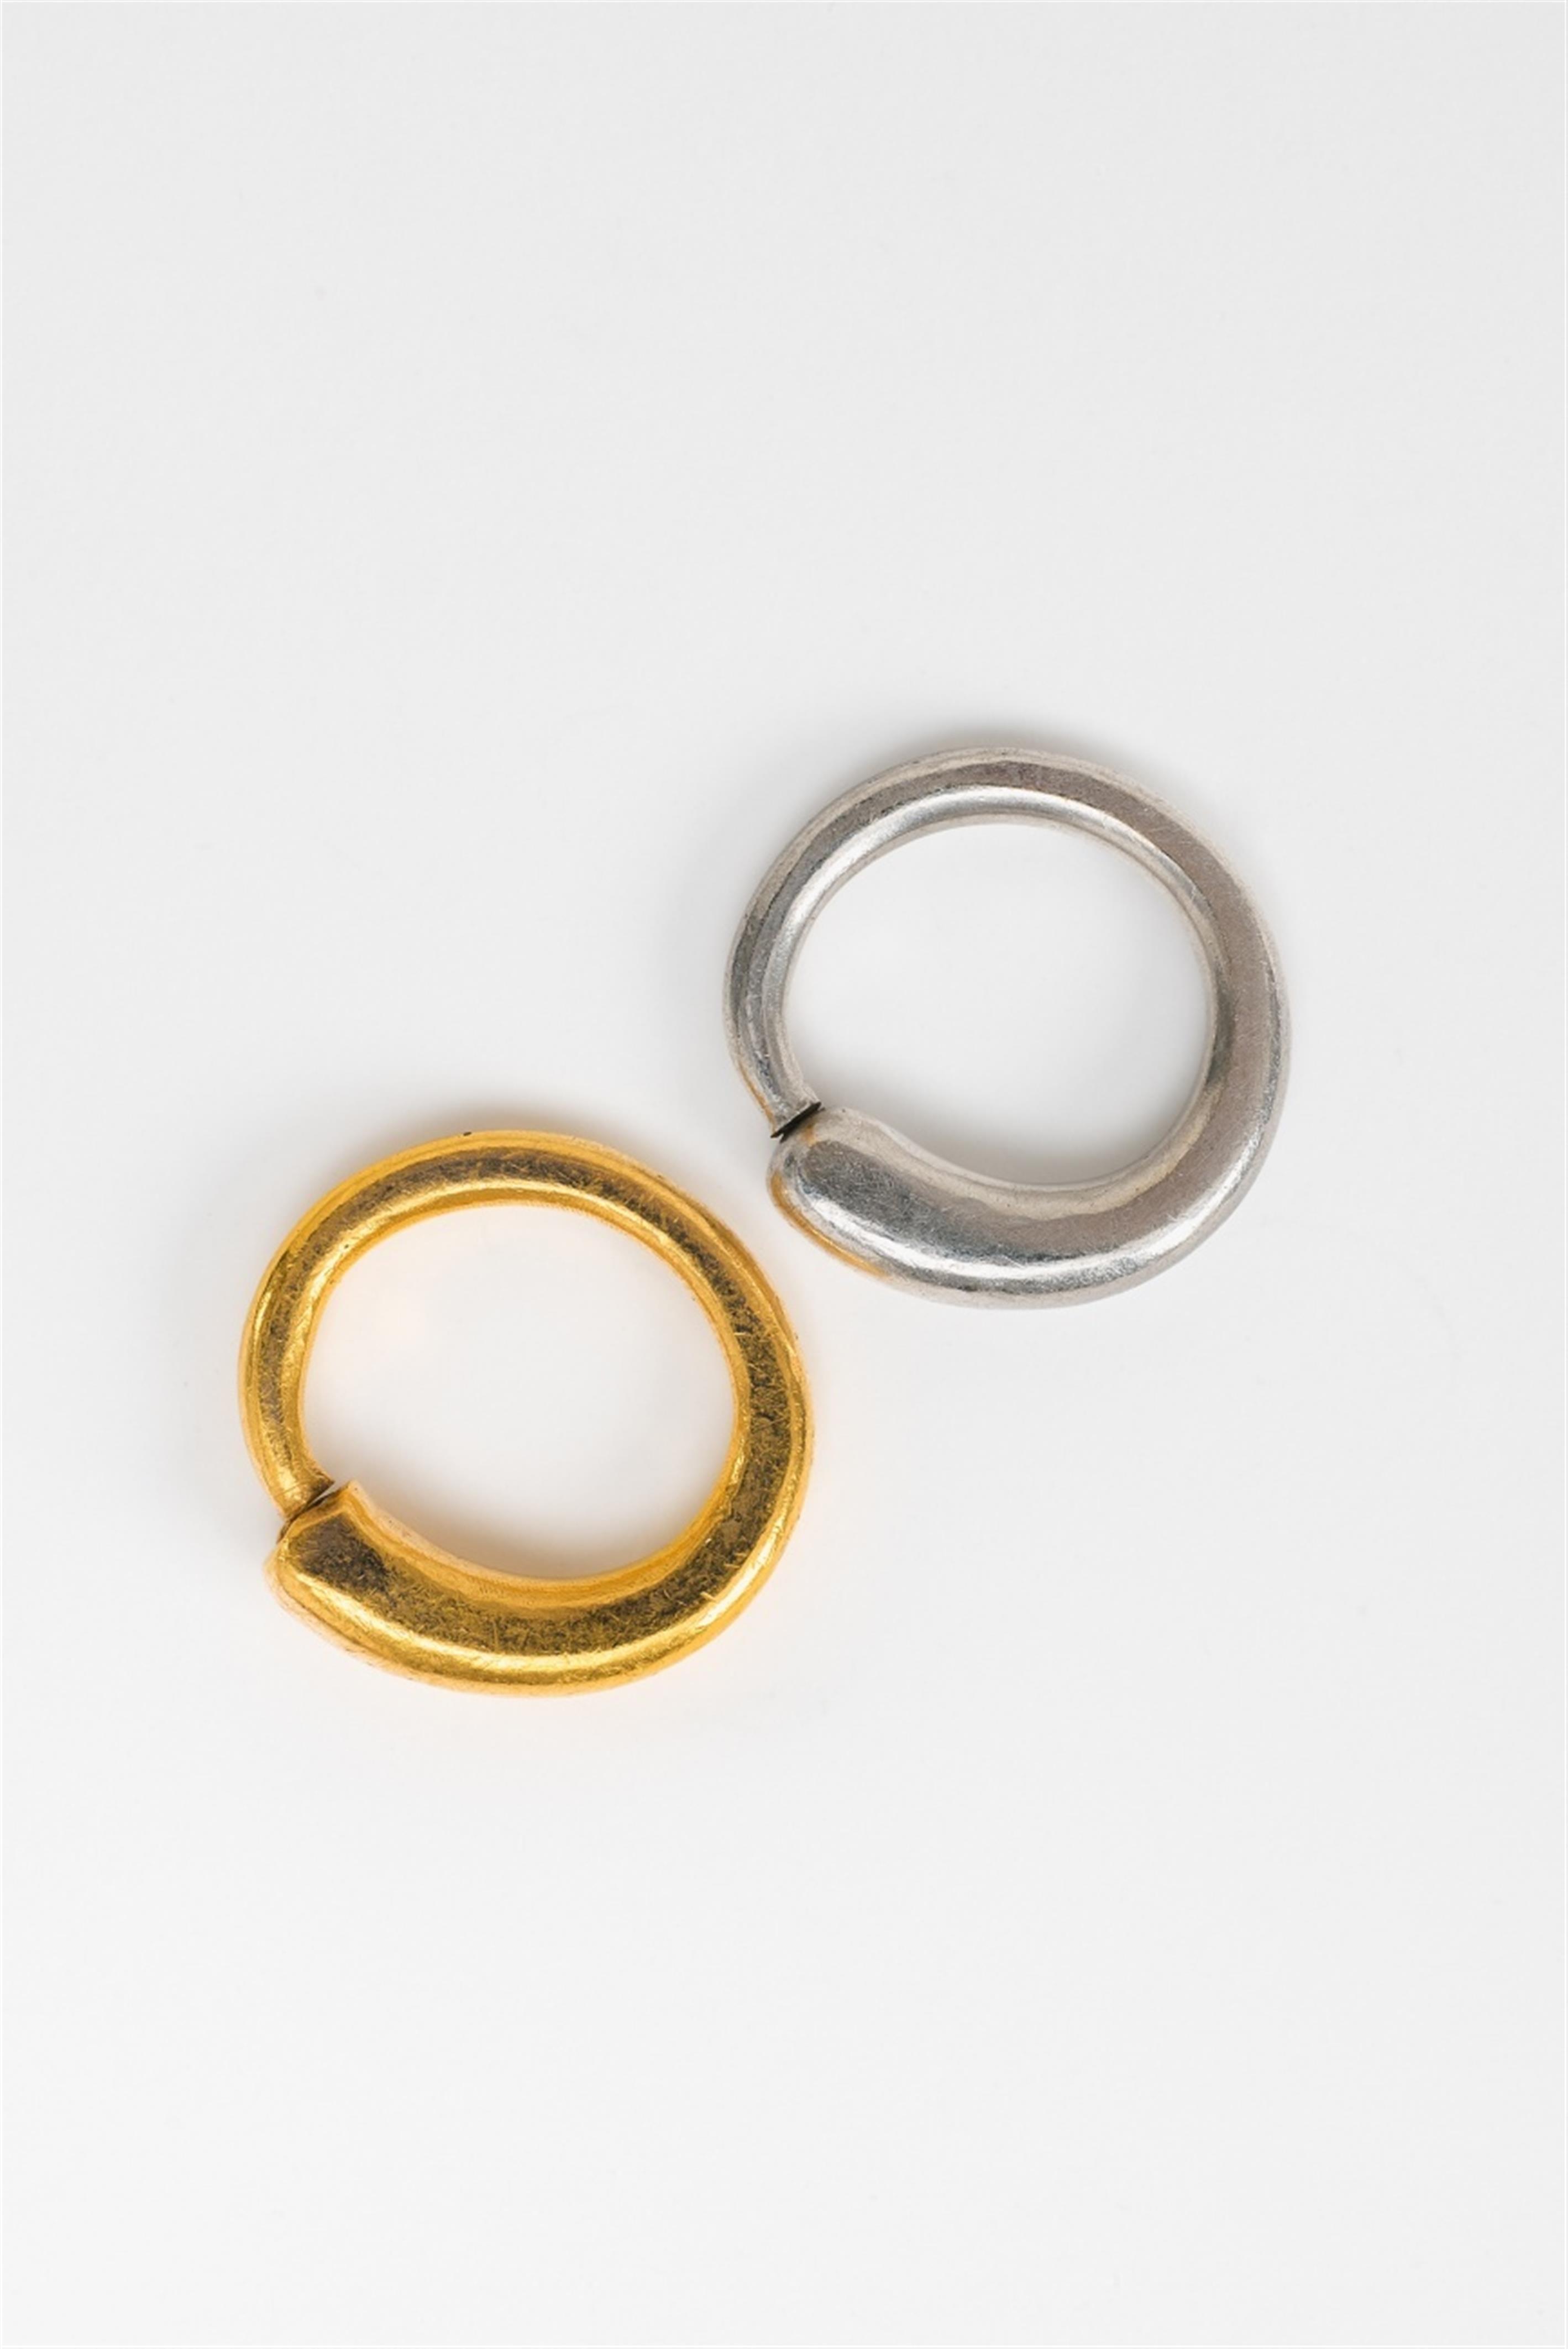 Two platinum/18 kt gold snake rings - image-1